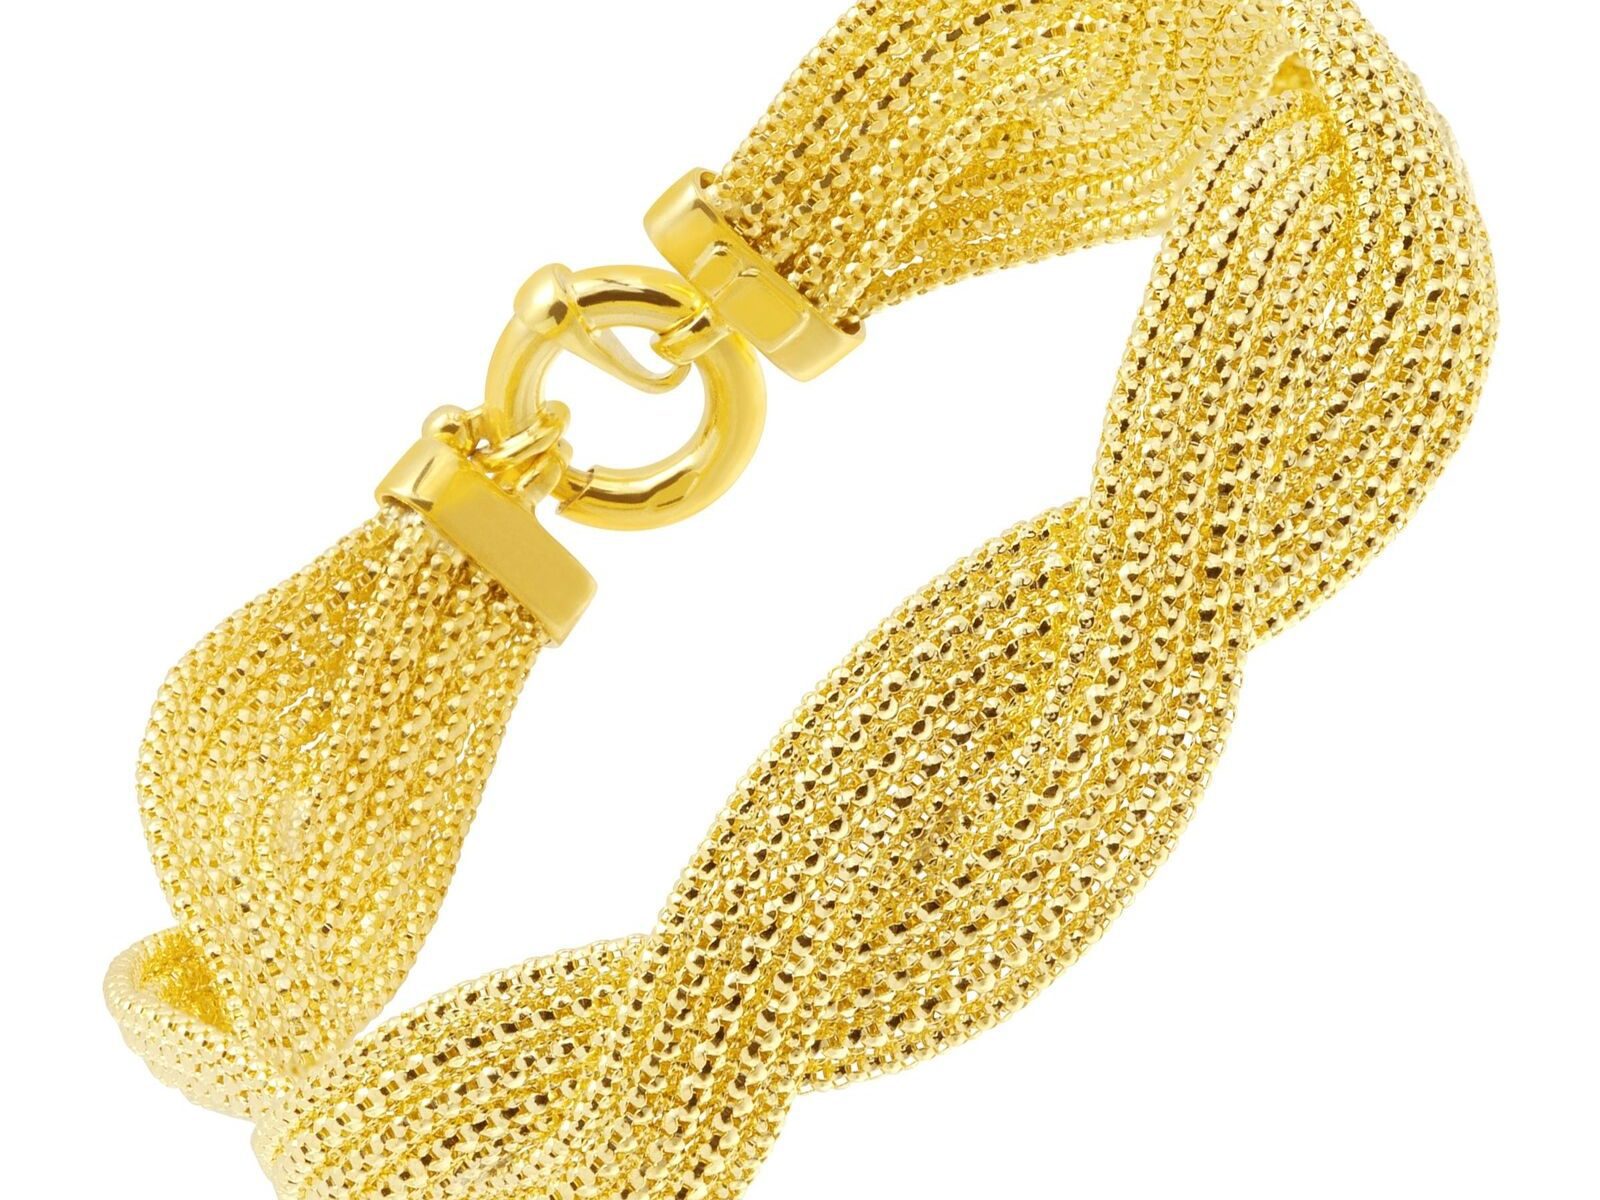 Eternity Gold Woven Popcorn Chain Bracelet in 14K Gold